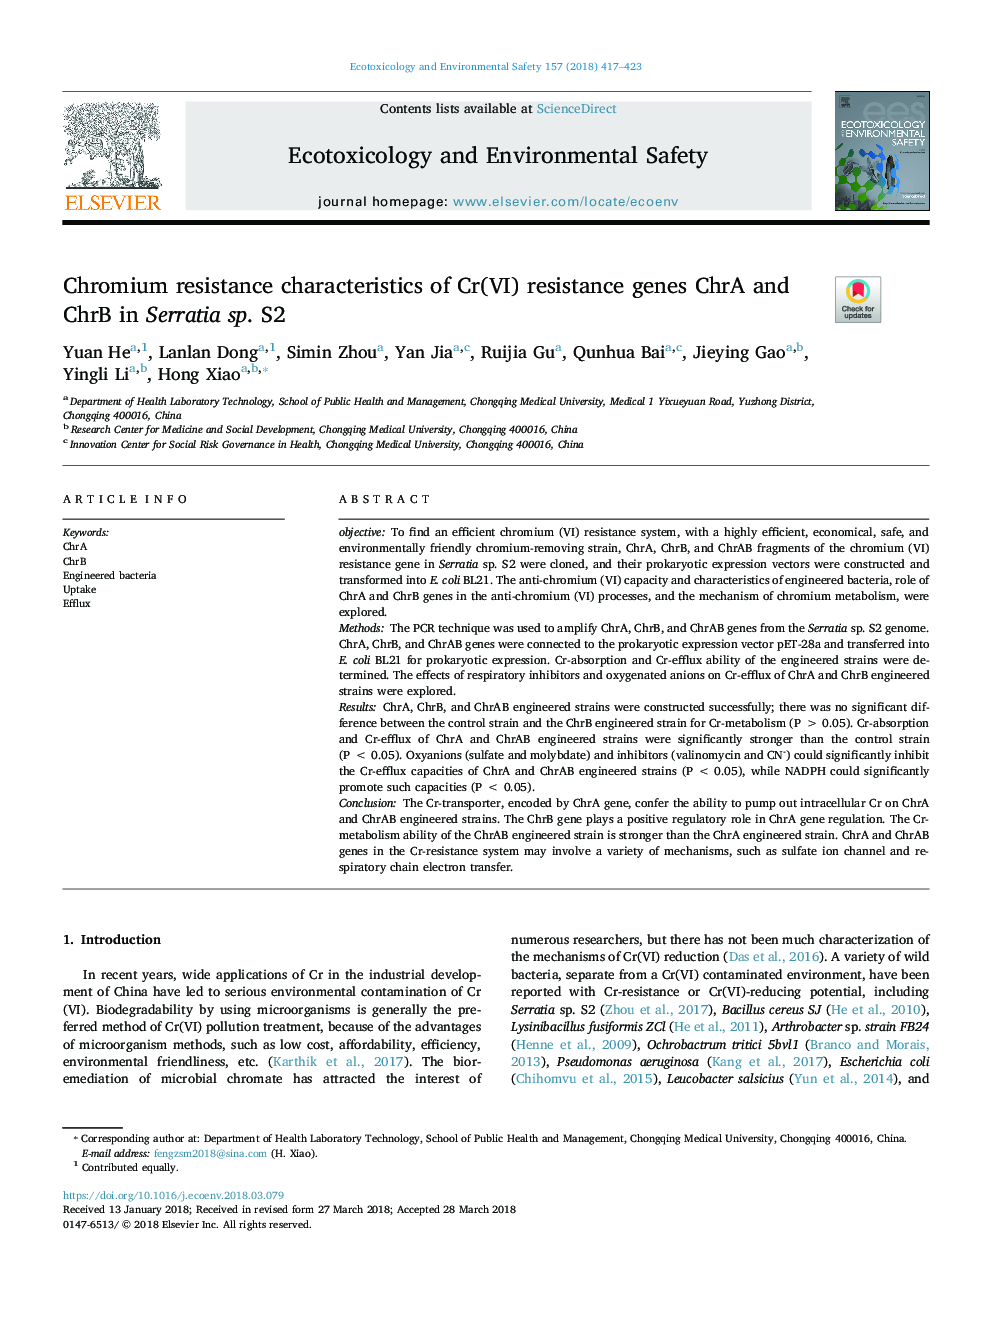 Chromium resistance characteristics of Cr(VI) resistance genes ChrA and ChrB in Serratia sp. S2